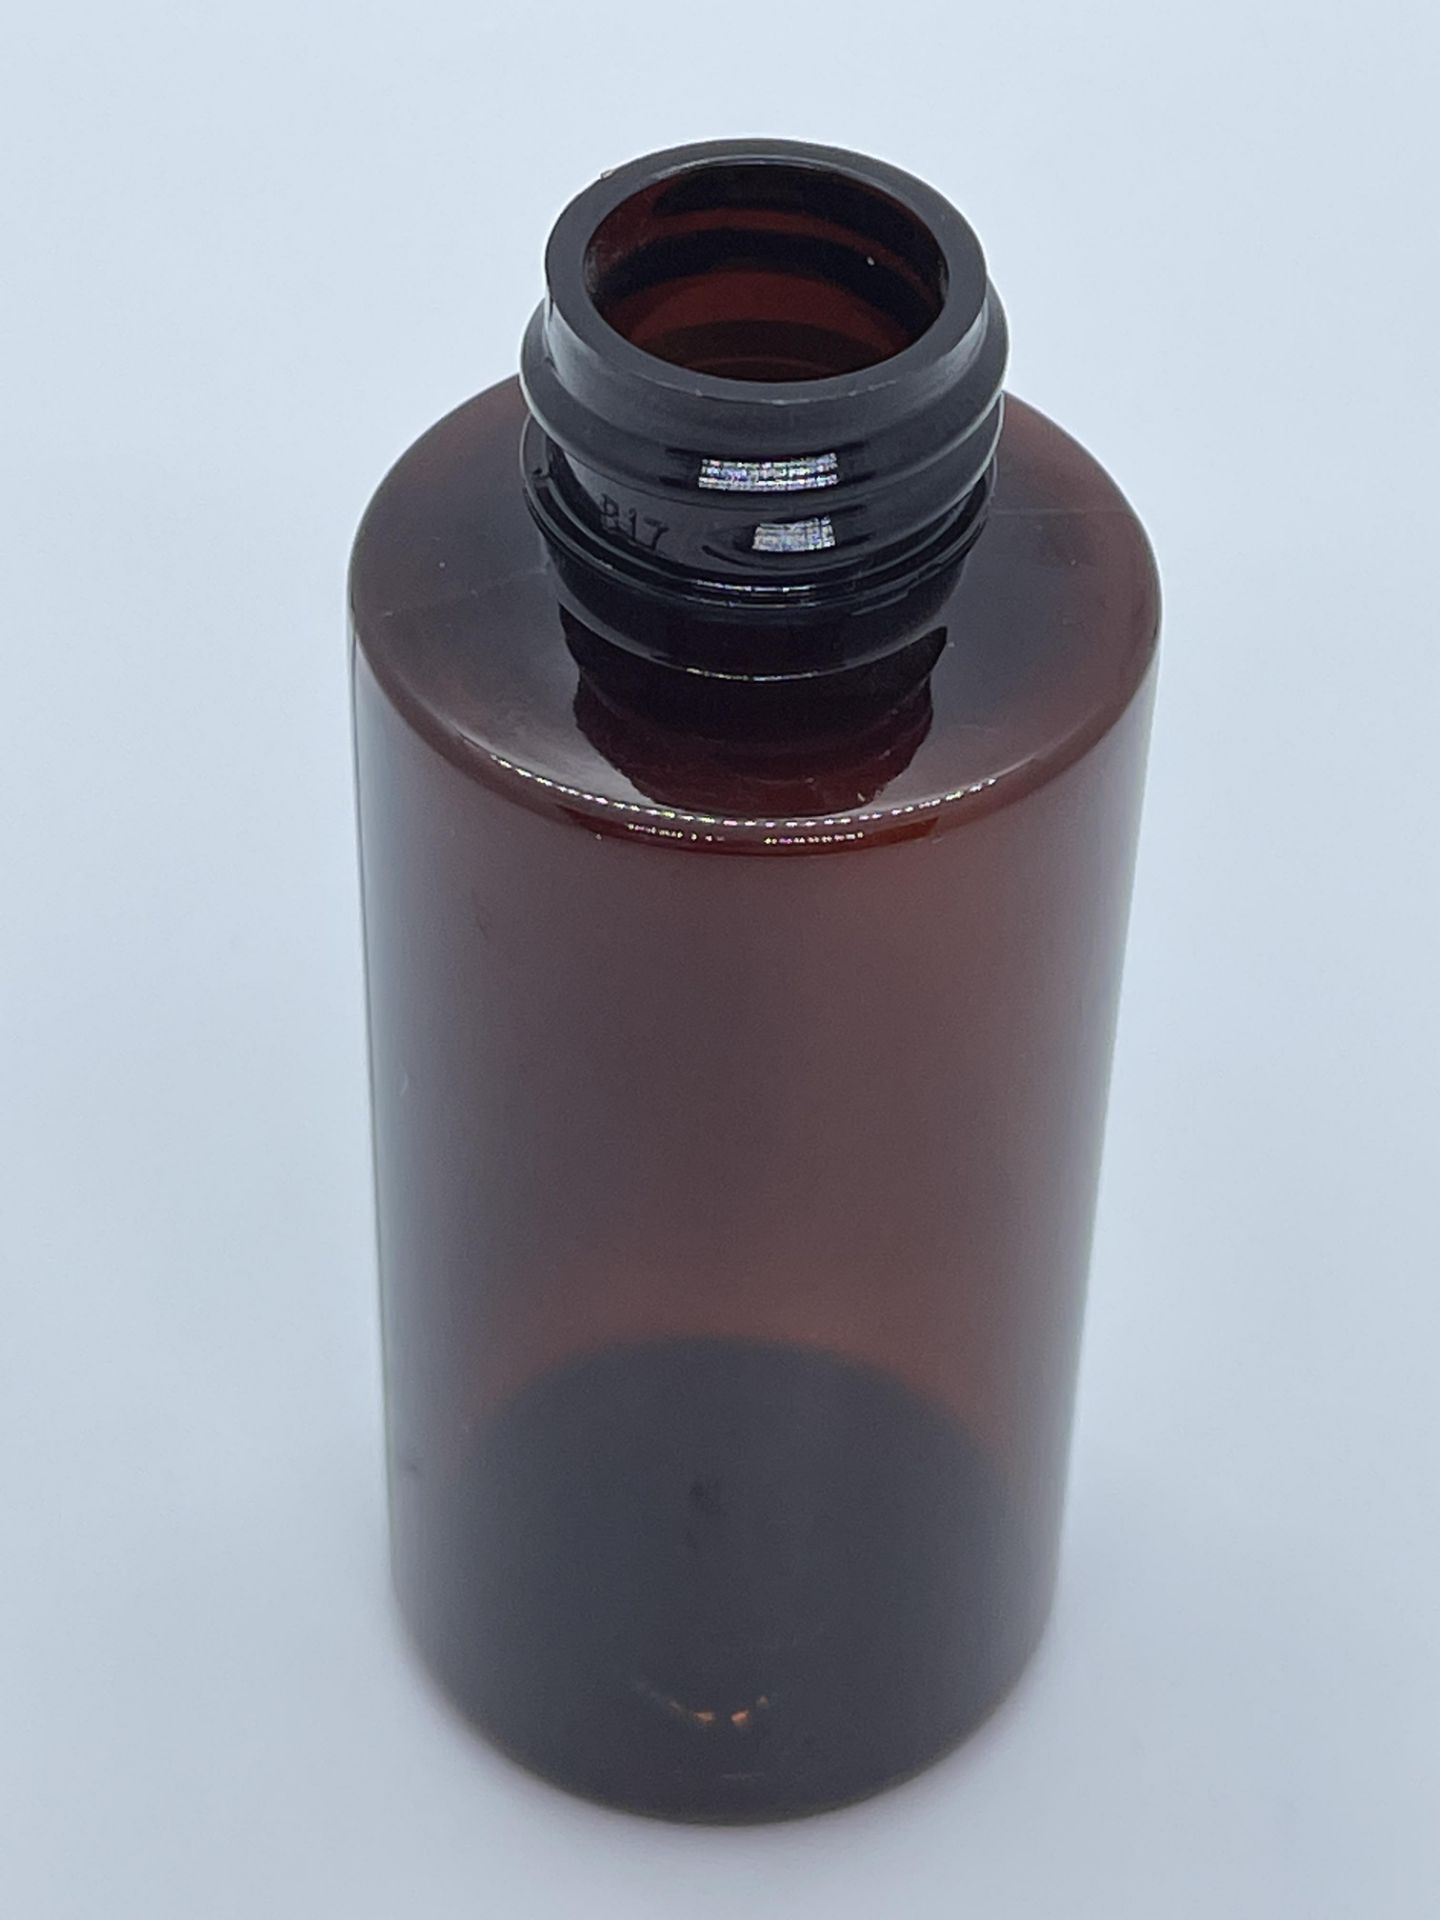 32,000 - Amber Cylinder Plastic 2 oz Empty Bottles, 20-410 Threading Neck, 2.25" Tall x 1 3/8" - Image 2 of 4